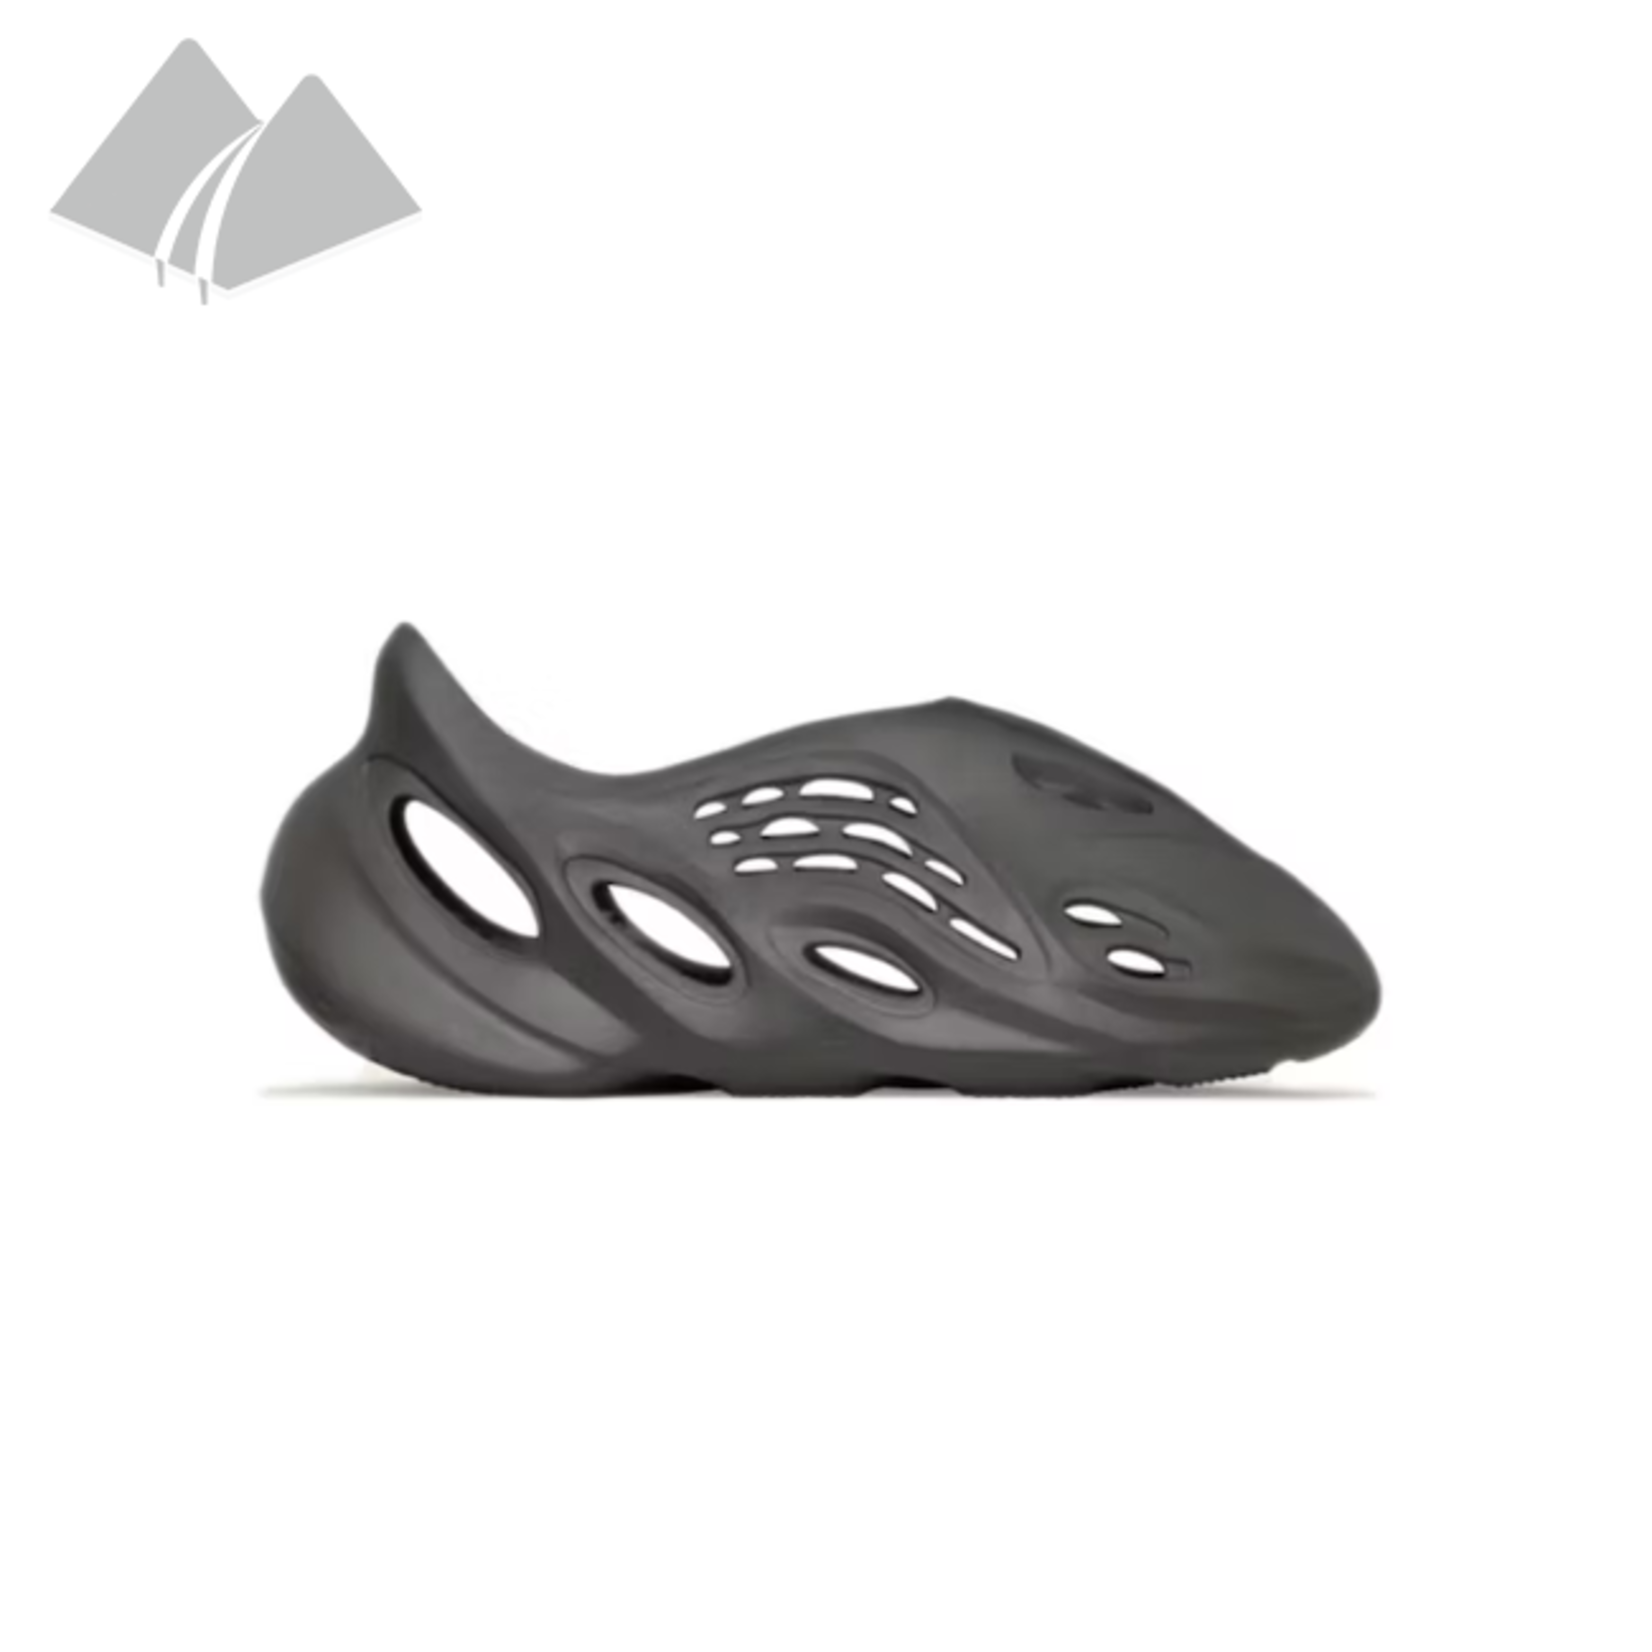 Adidas Adidas Yeezy Foam Runner (M) Carbon